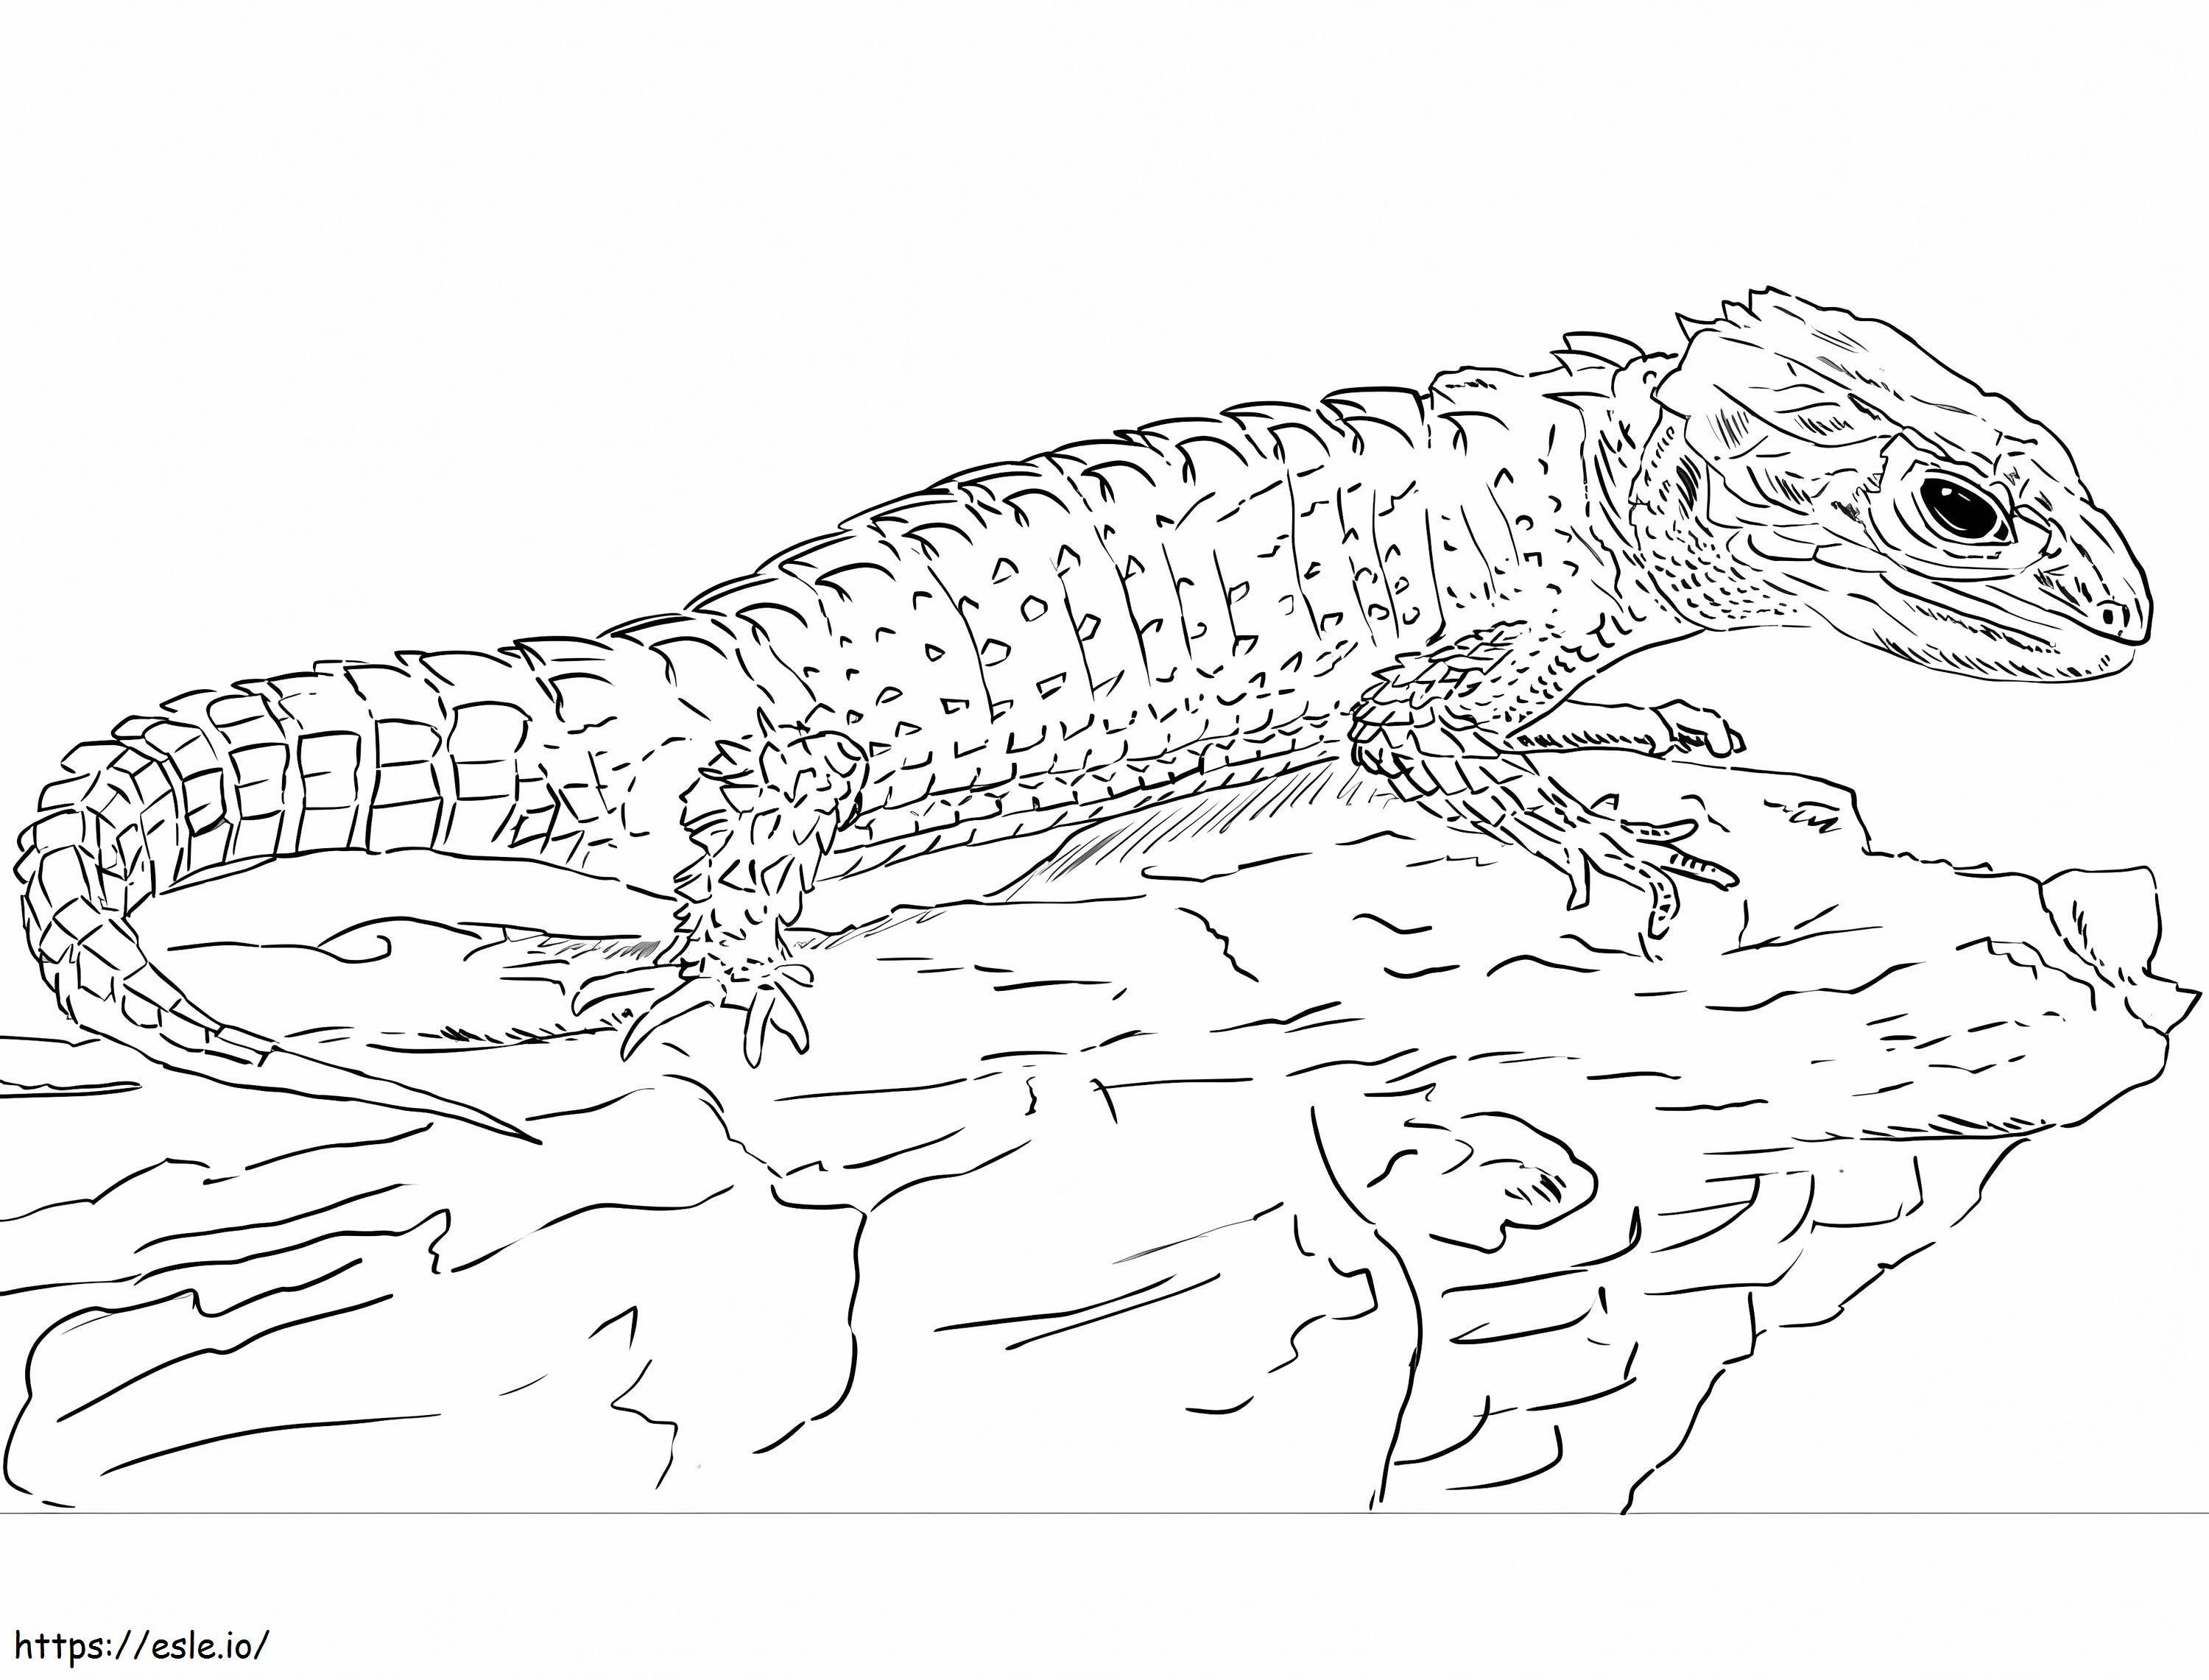 Crocodile Skink coloring page